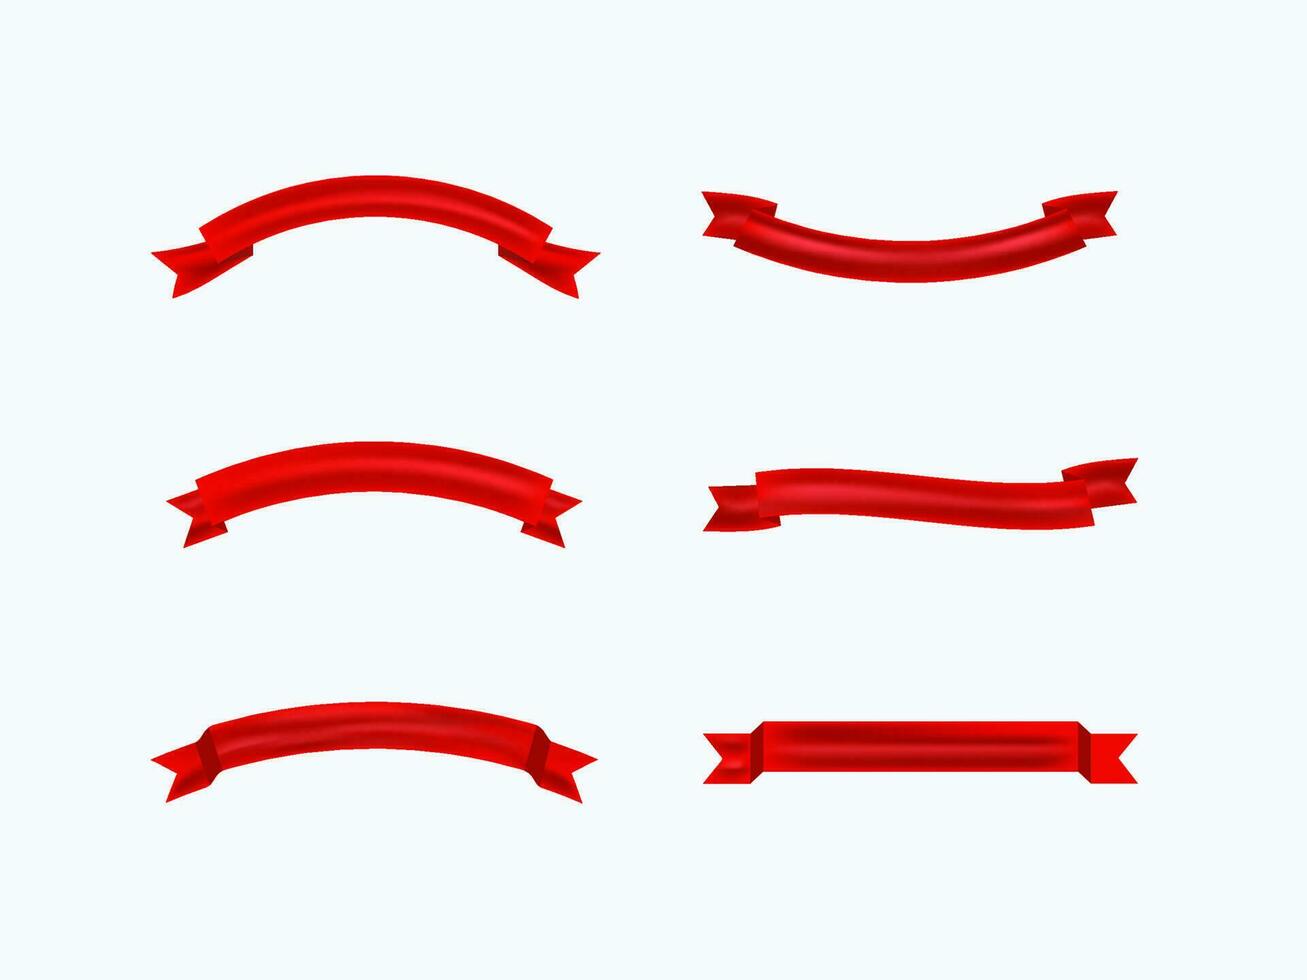 röd band samling på vit bakgrund. vektor